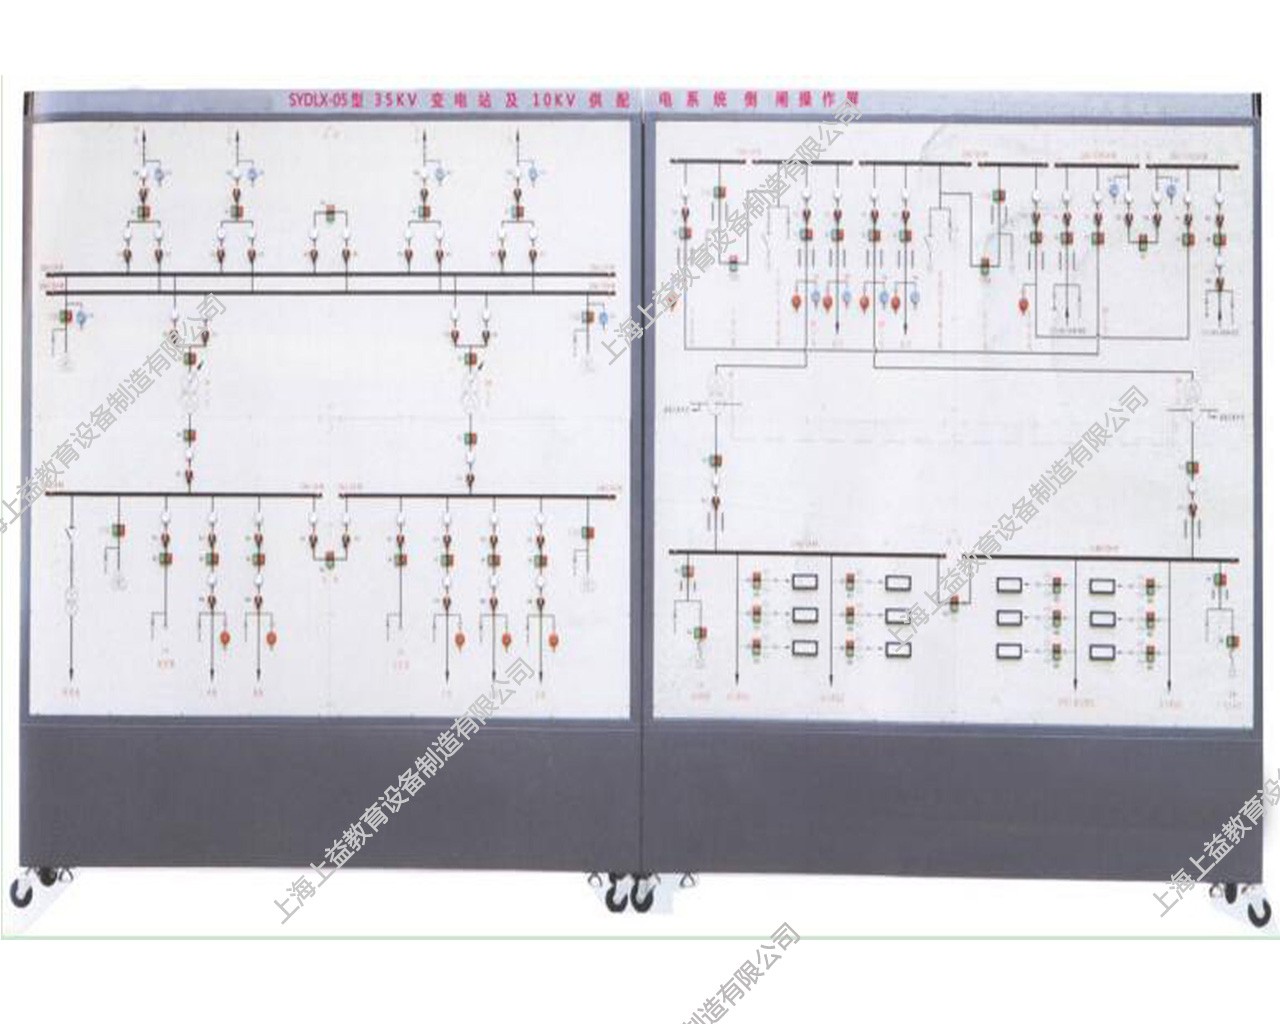 SYDLX-05型35kV变电站及10kV供配电系统倒闸操作屏